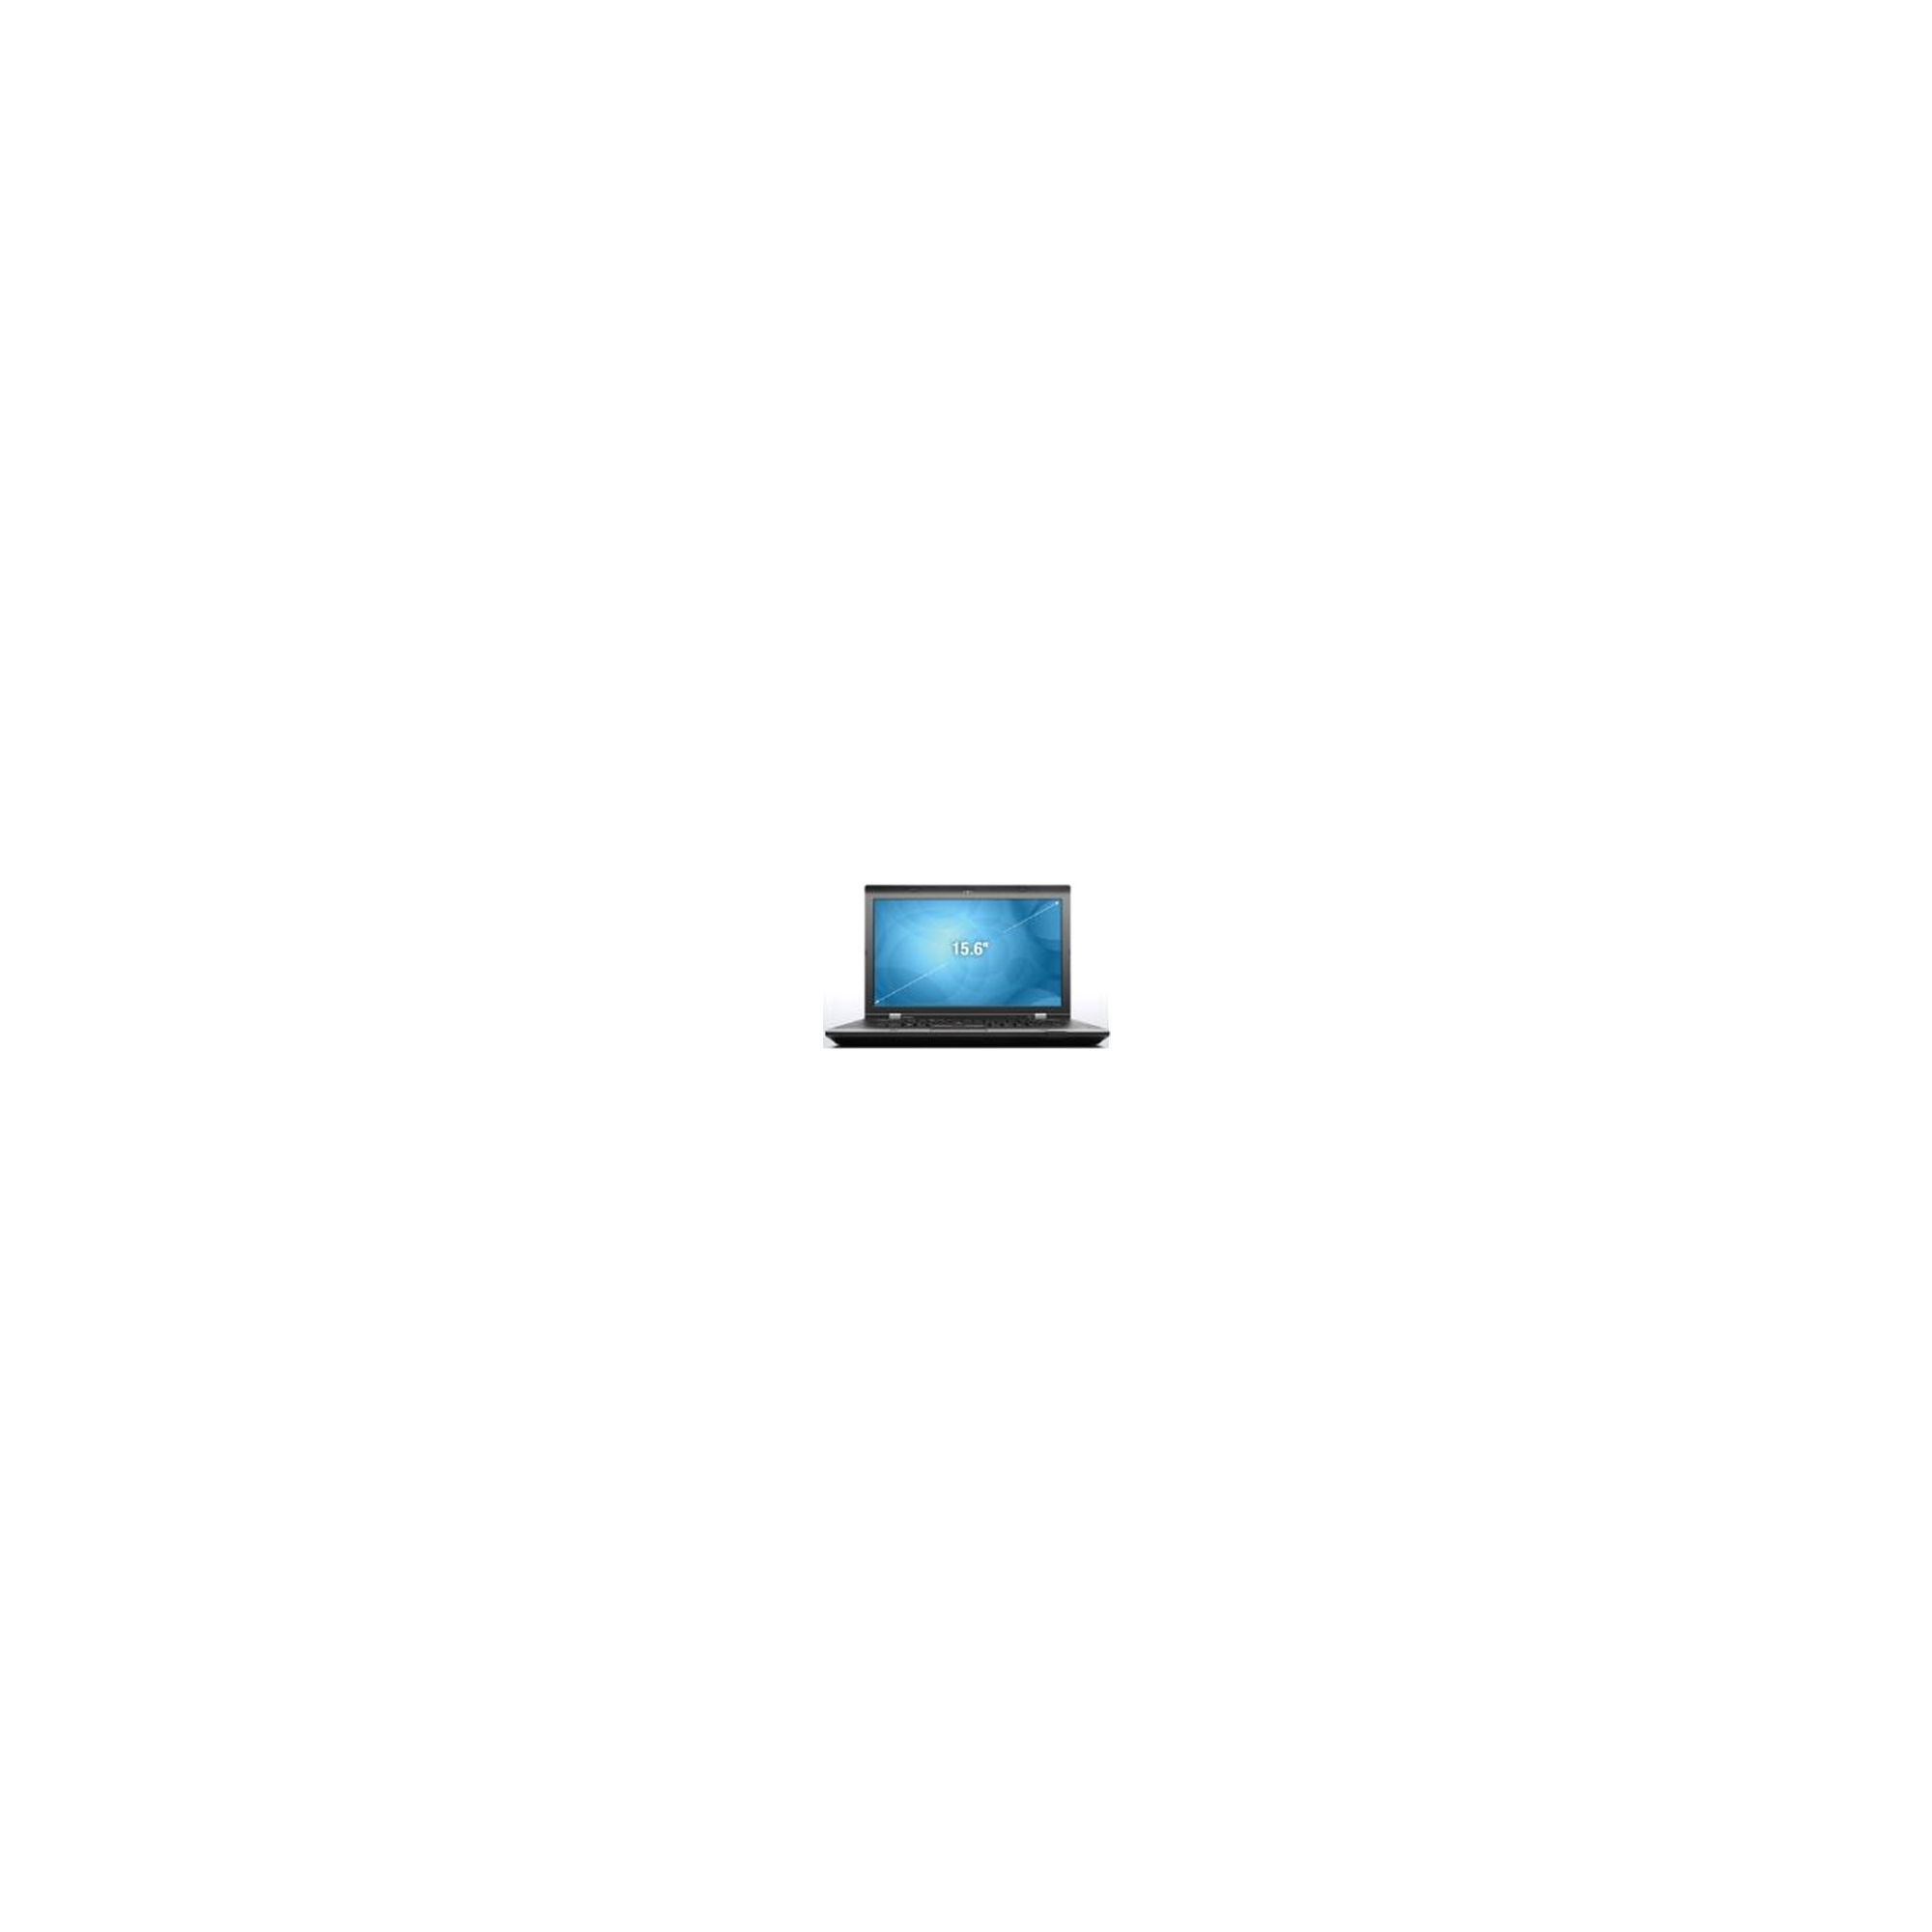 Lenovo ThinkPad L530 24813SG (15.6 inch) Notebook Core i3 (3110M) 2.4GHz 4GB 500GB DVD±RW WLAN BT Webcam Windows 7 Pro 64-bit/Windows 8 Pro 64-bit at Tesco Direct